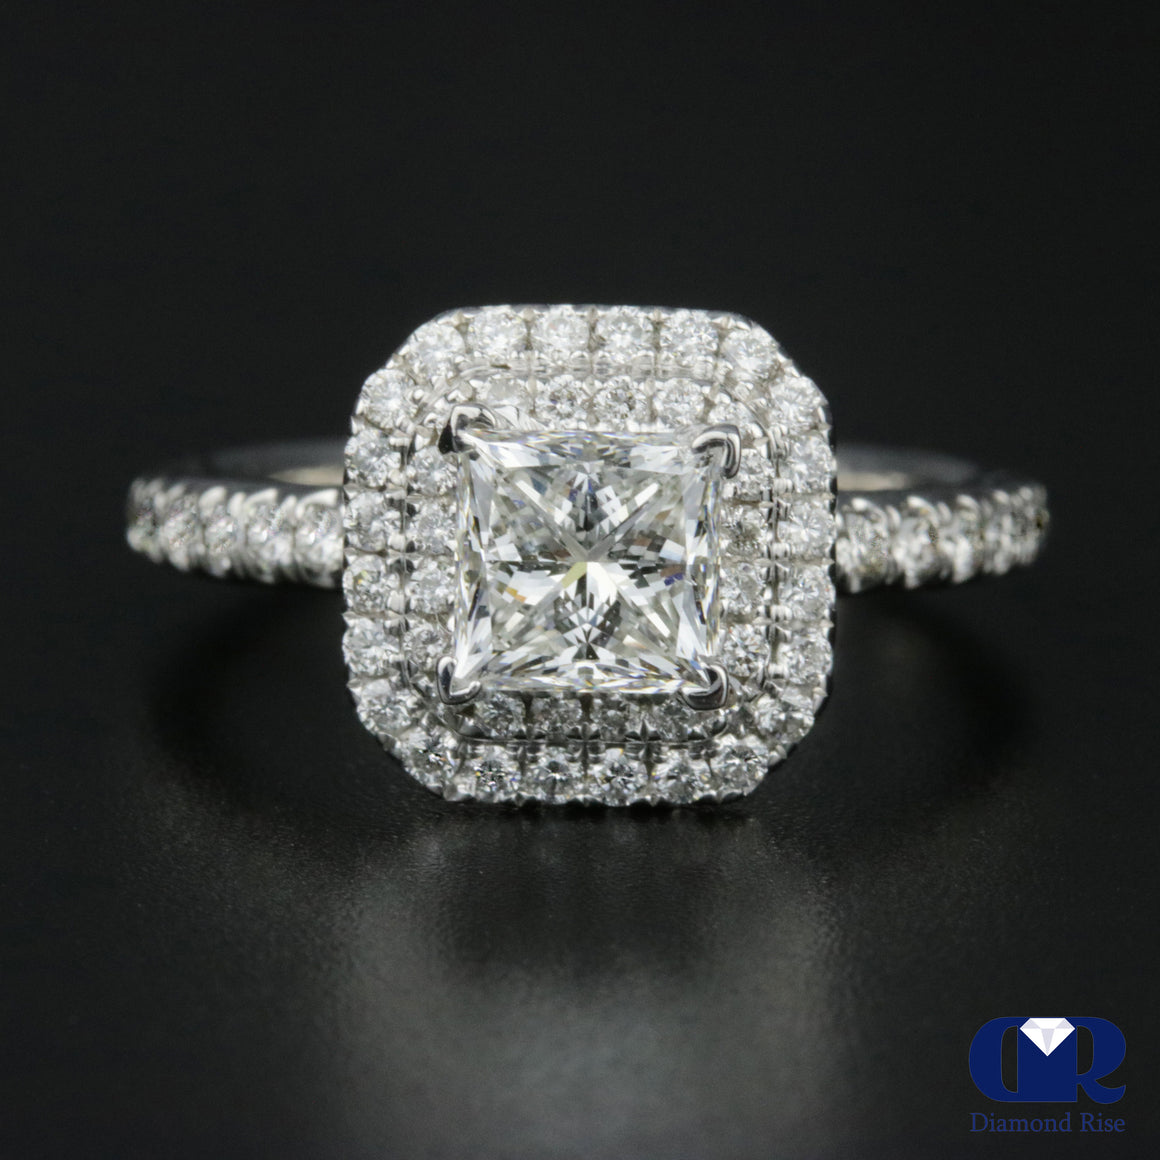 1.56 Carat Princess Cut Diamond Double Halo Engagement Ring In 14K White Gold - Diamond Rise Jewelry